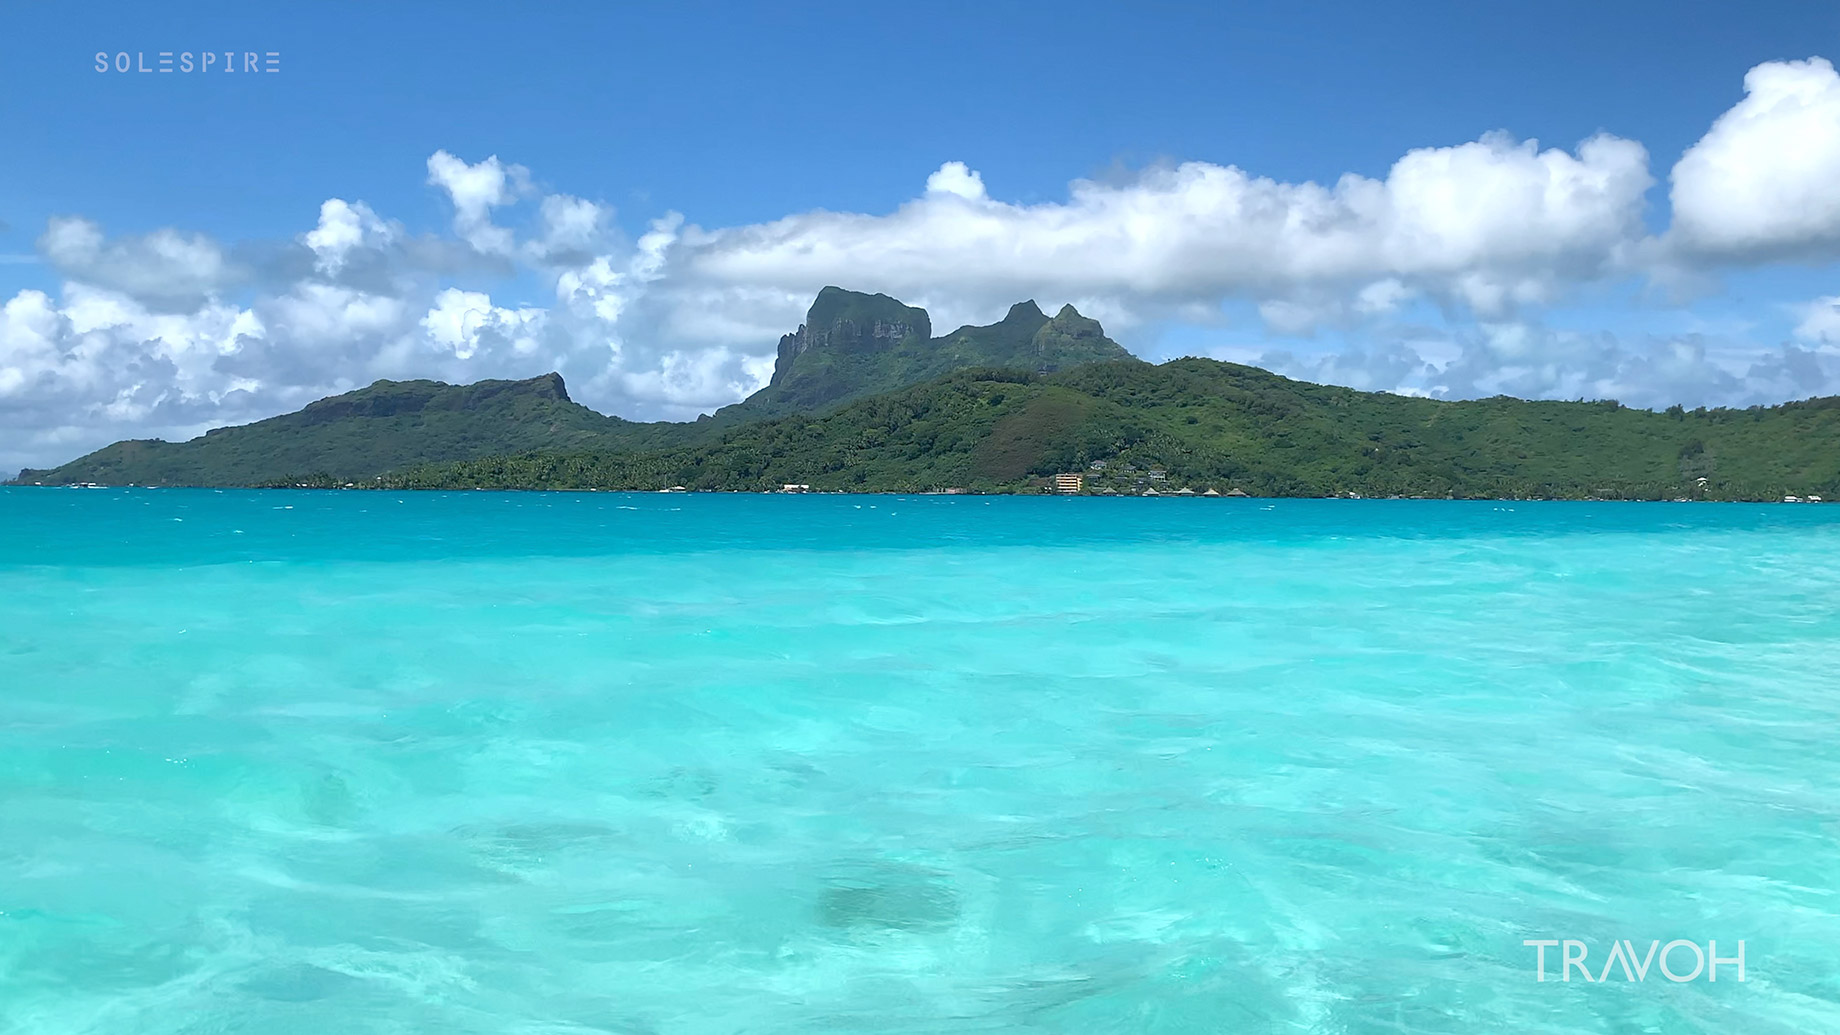 Daydreaming and Exploring Island Views by Boat - Bora Bora, French Polynesia - 4K Travel Video